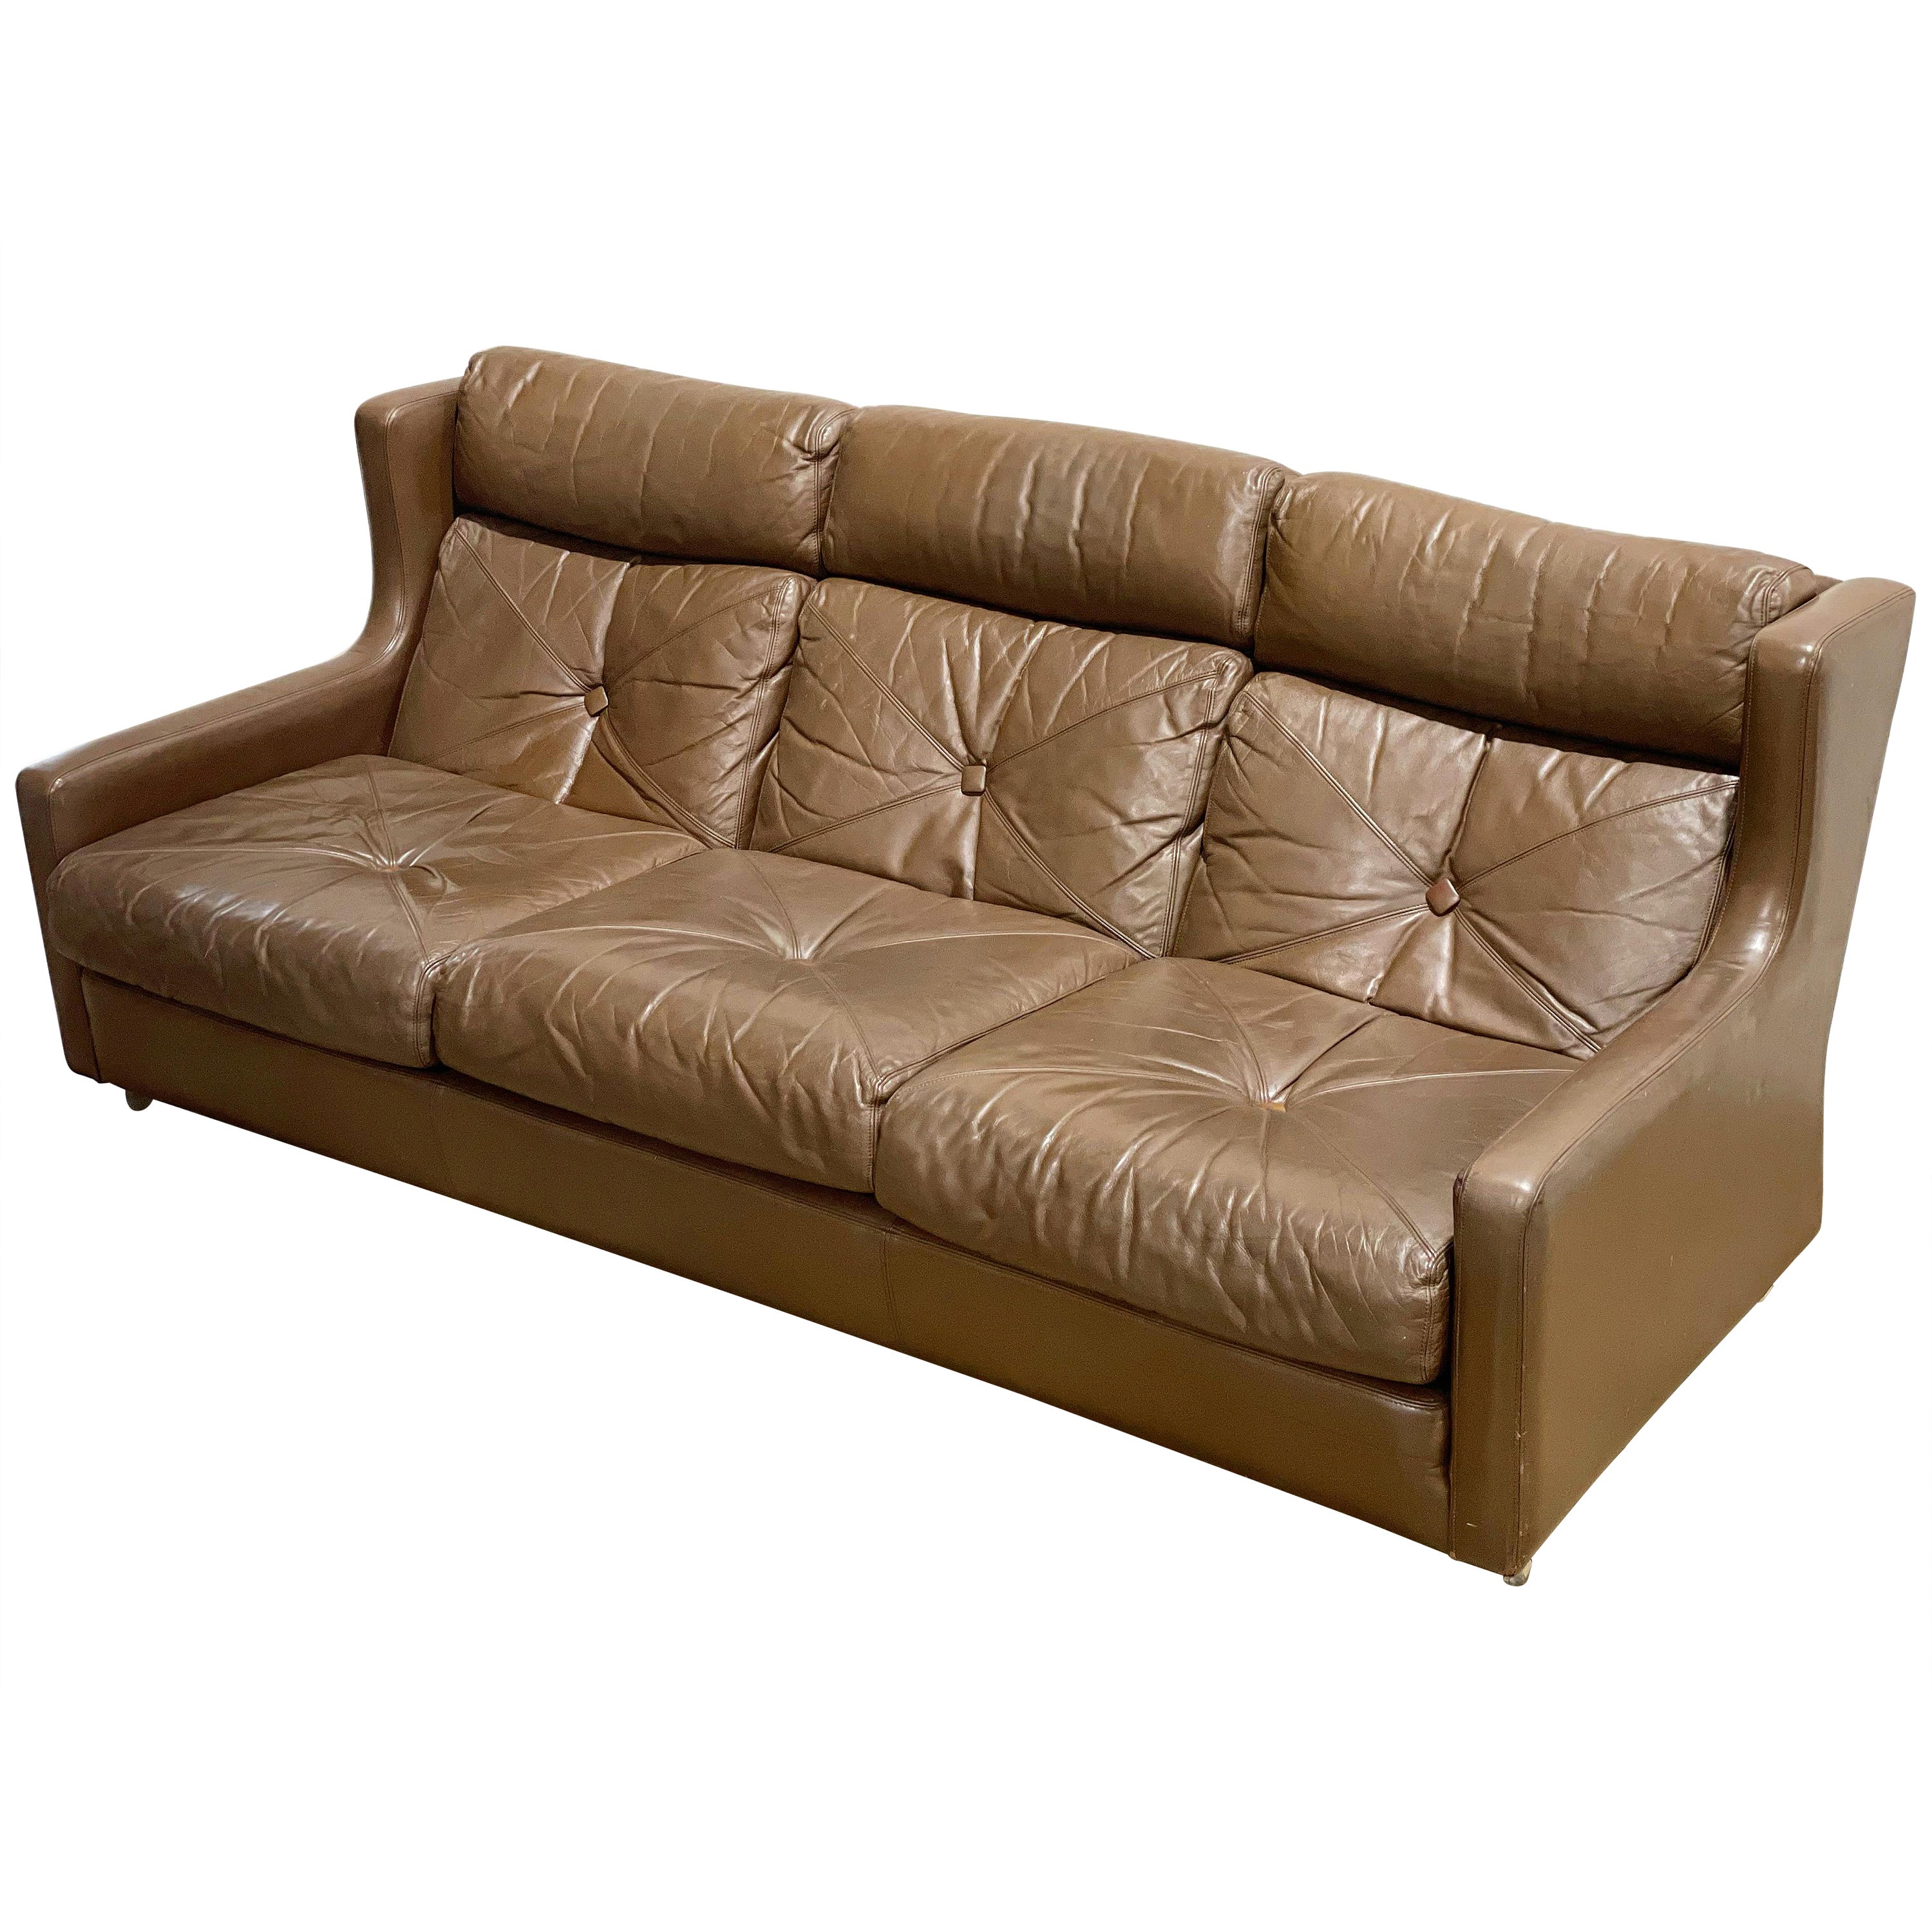 Mid-Century Modern Wingback Leather Sofa, Chocolate Brown